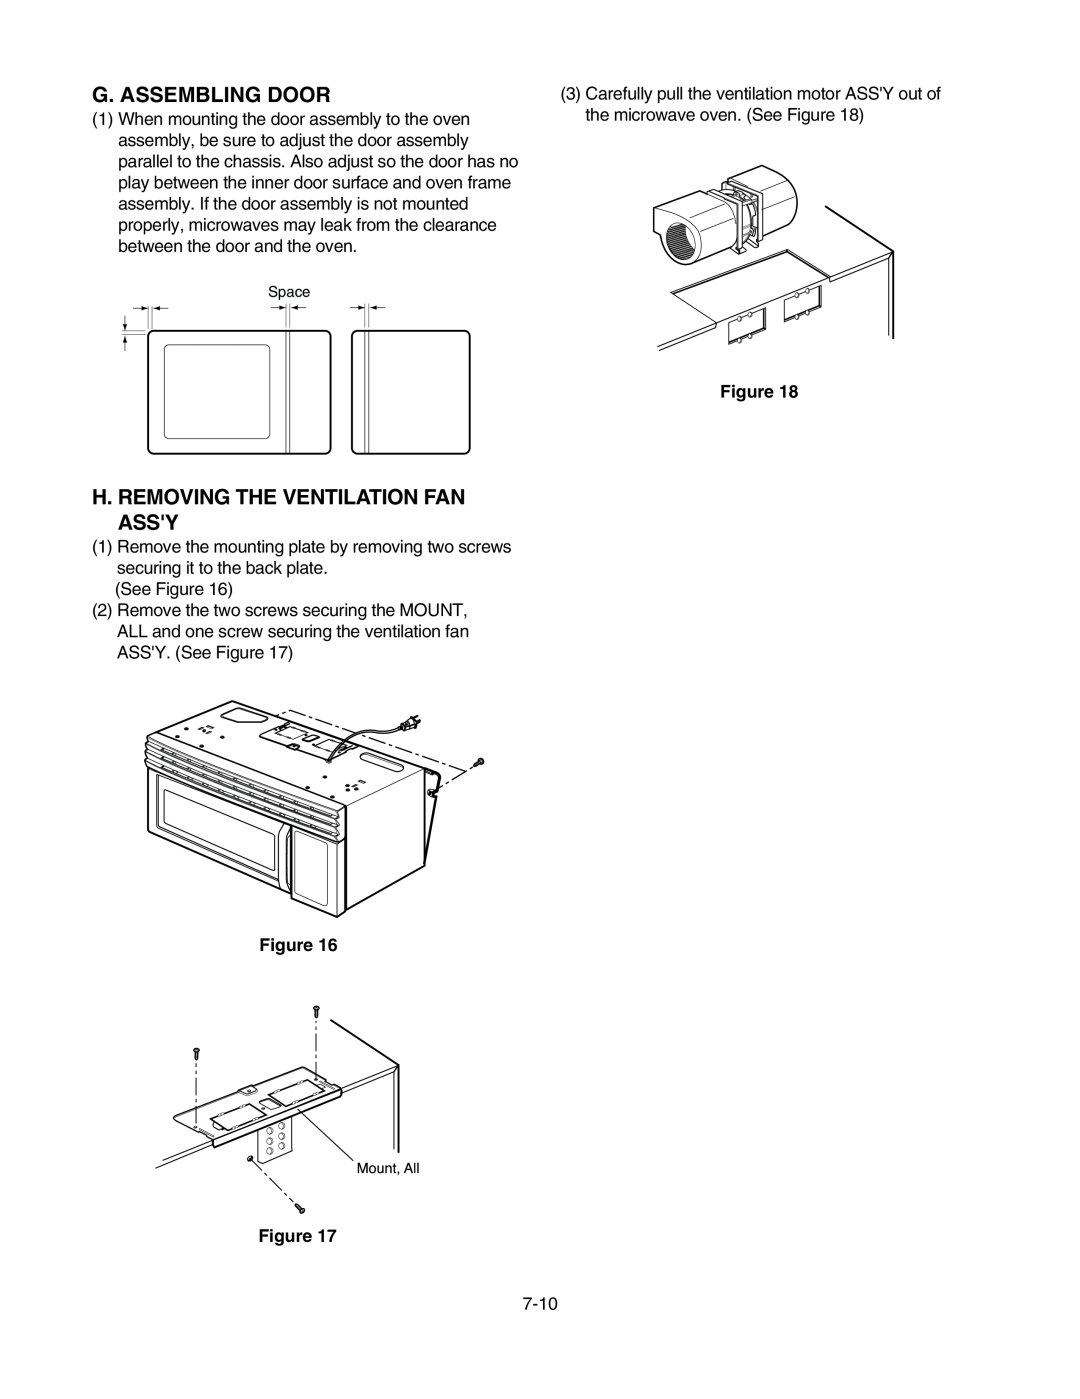 Kenmore 721.805994, 721.805944, 721.805934 manual G. Assembling Door, H. Removing The Ventilation Fan Assy, Figure Figure 